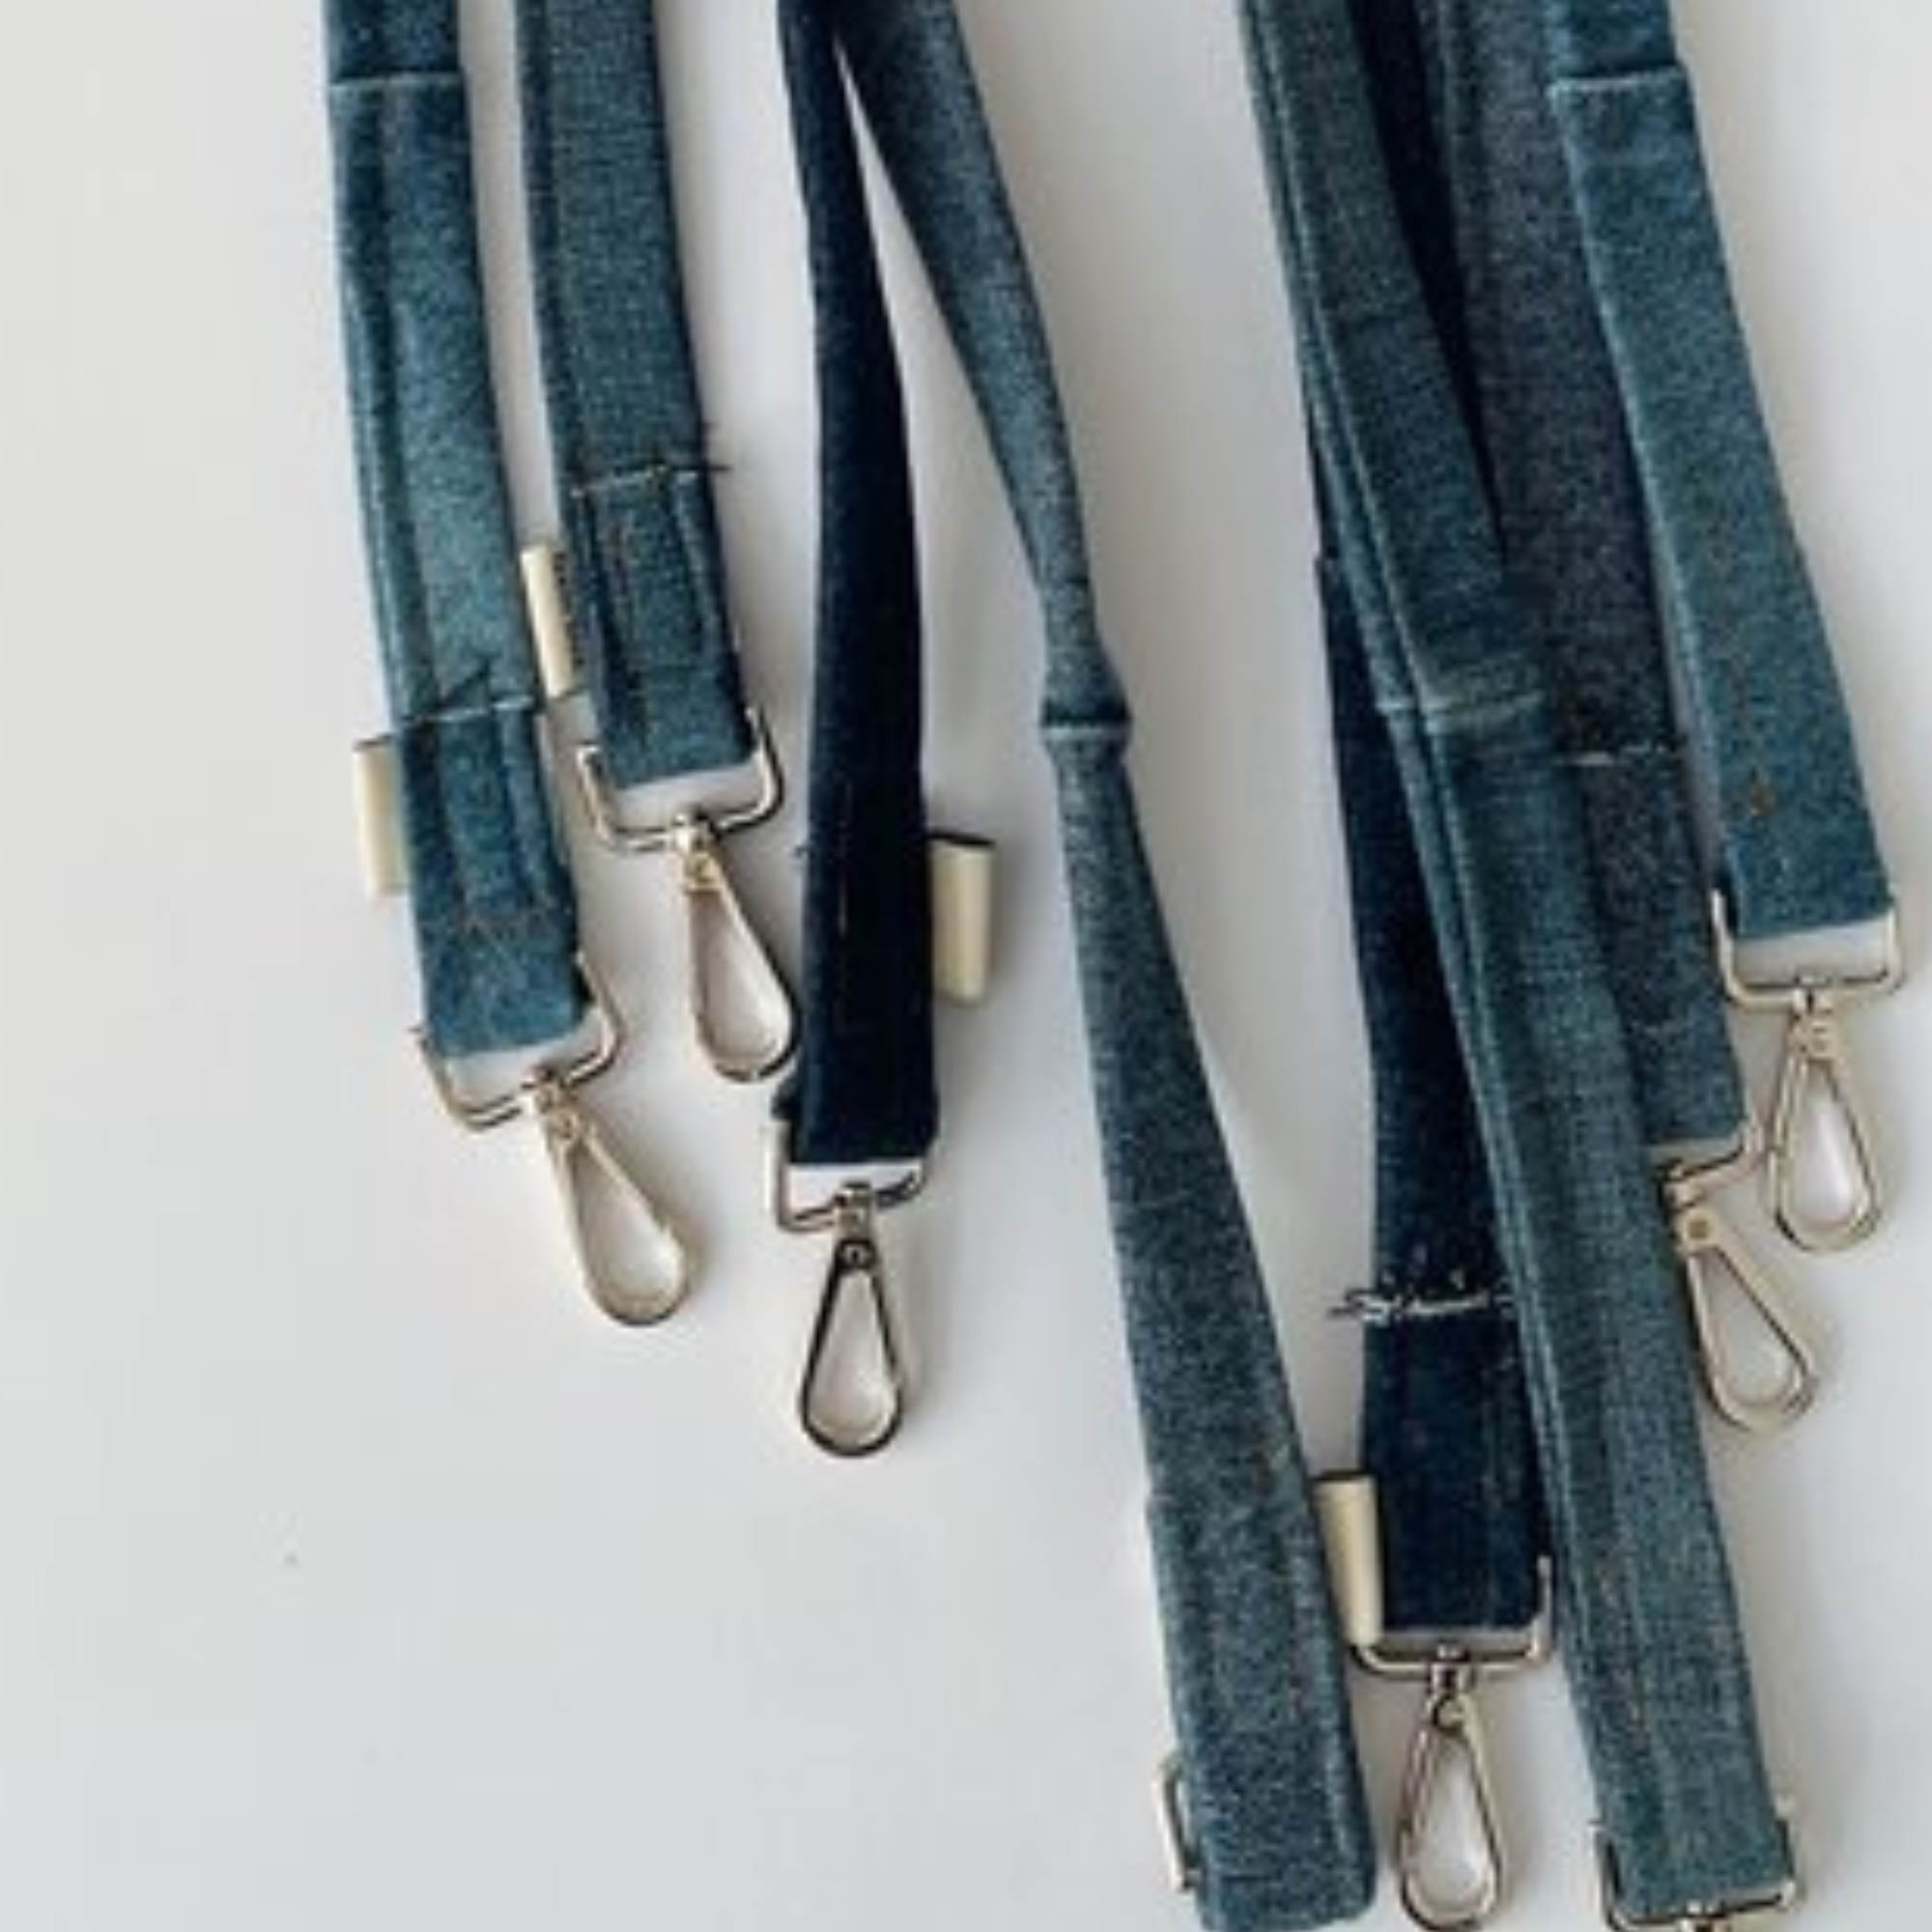 DIY Denim Handbag with an Upcycled Leather Belt Strap